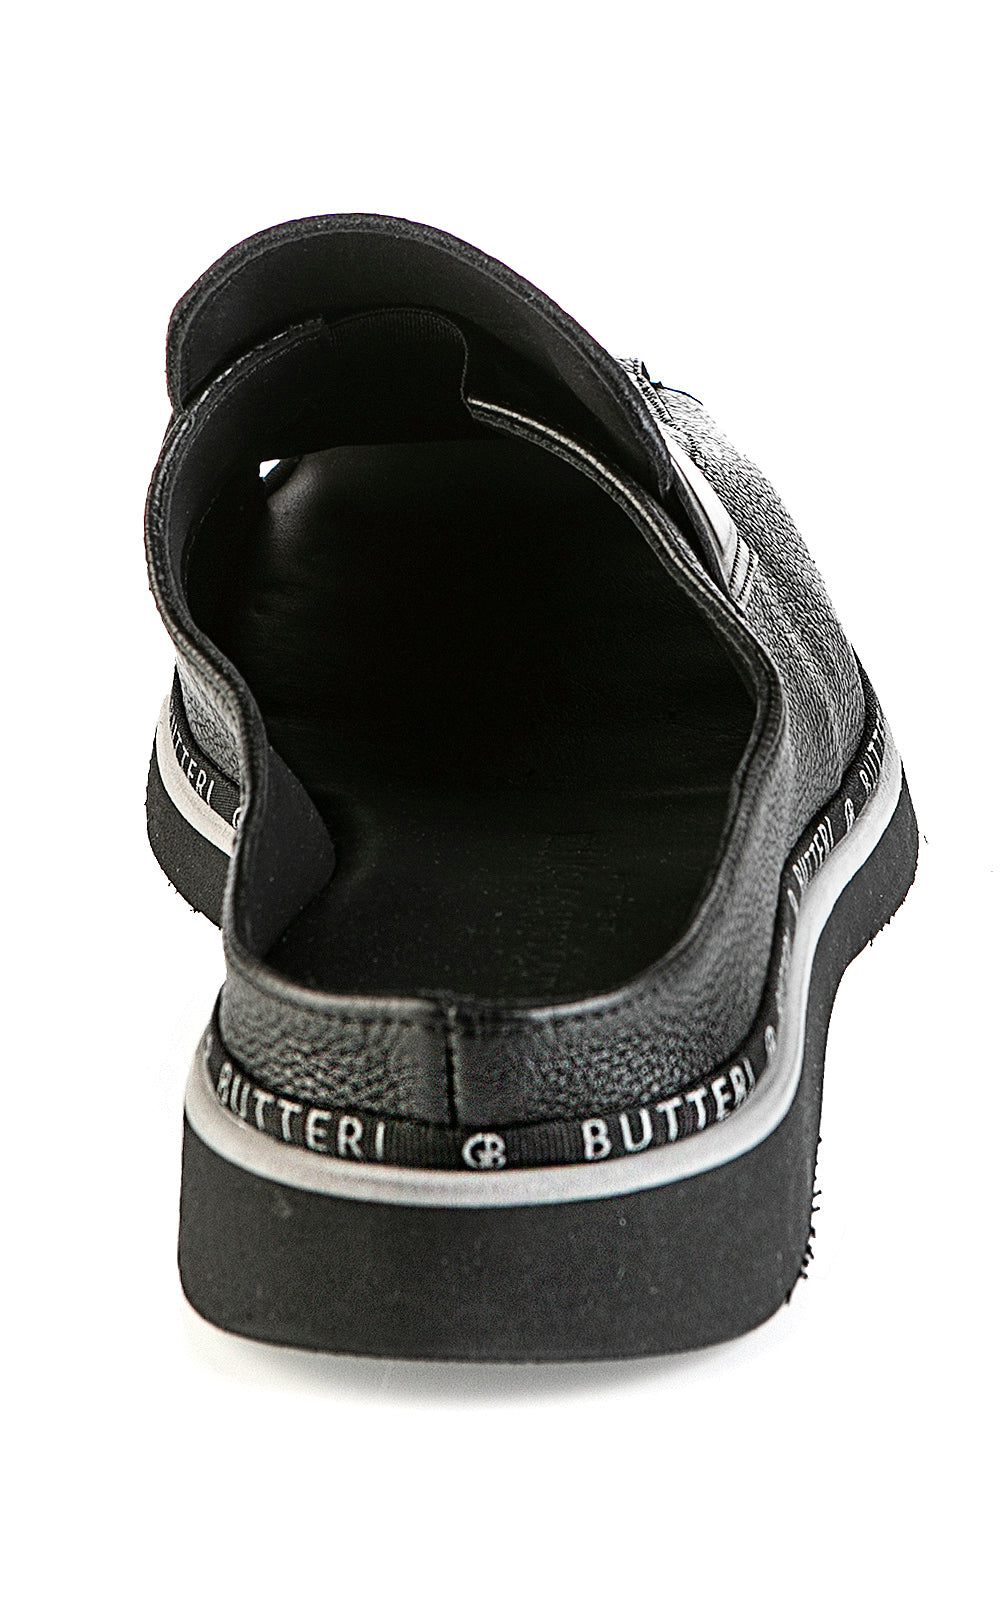 8813 Gianfranco Butteri Sandals / Black